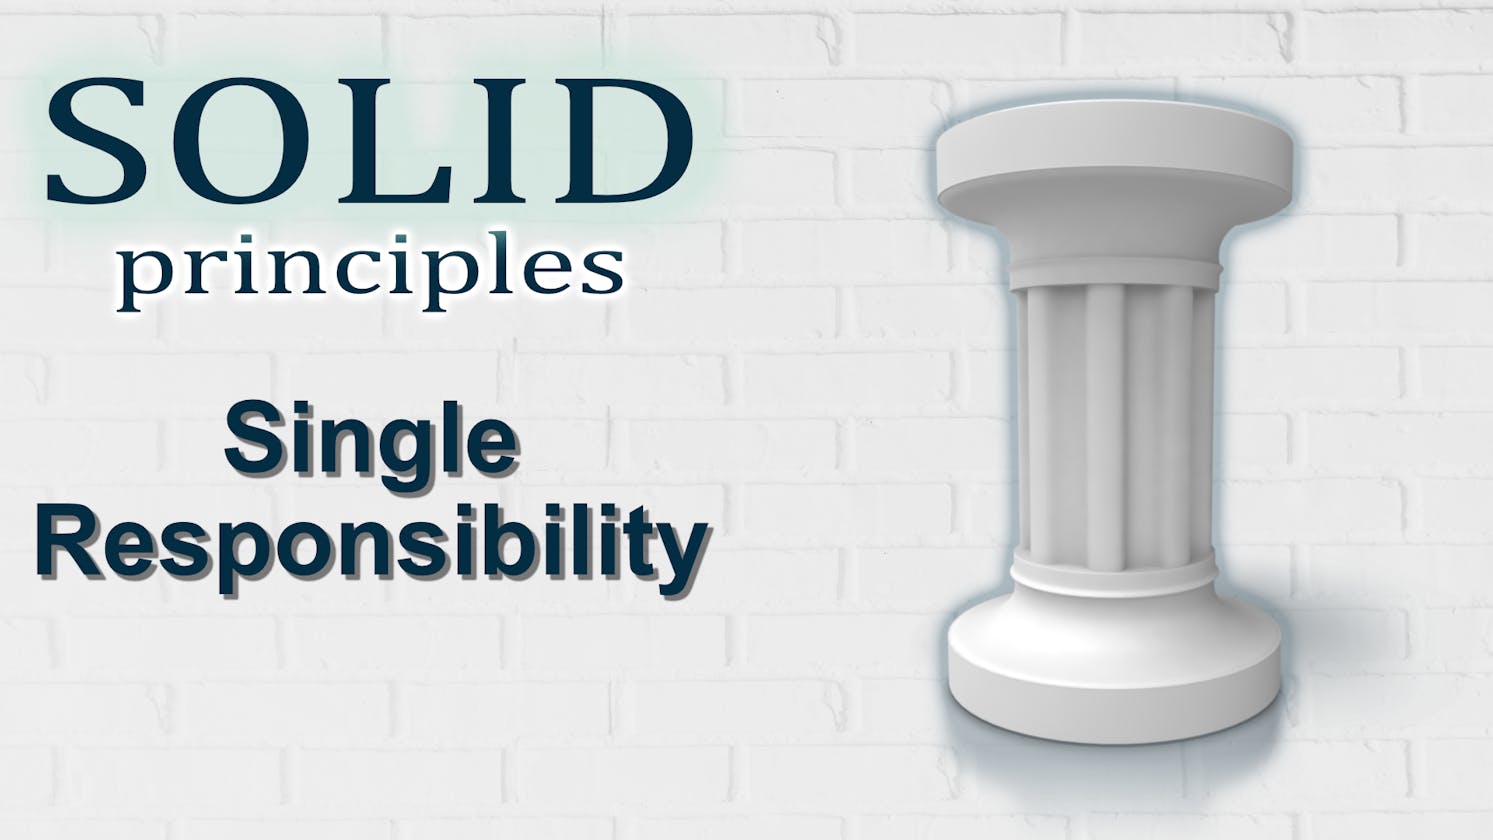 Single responsibility: Script includes